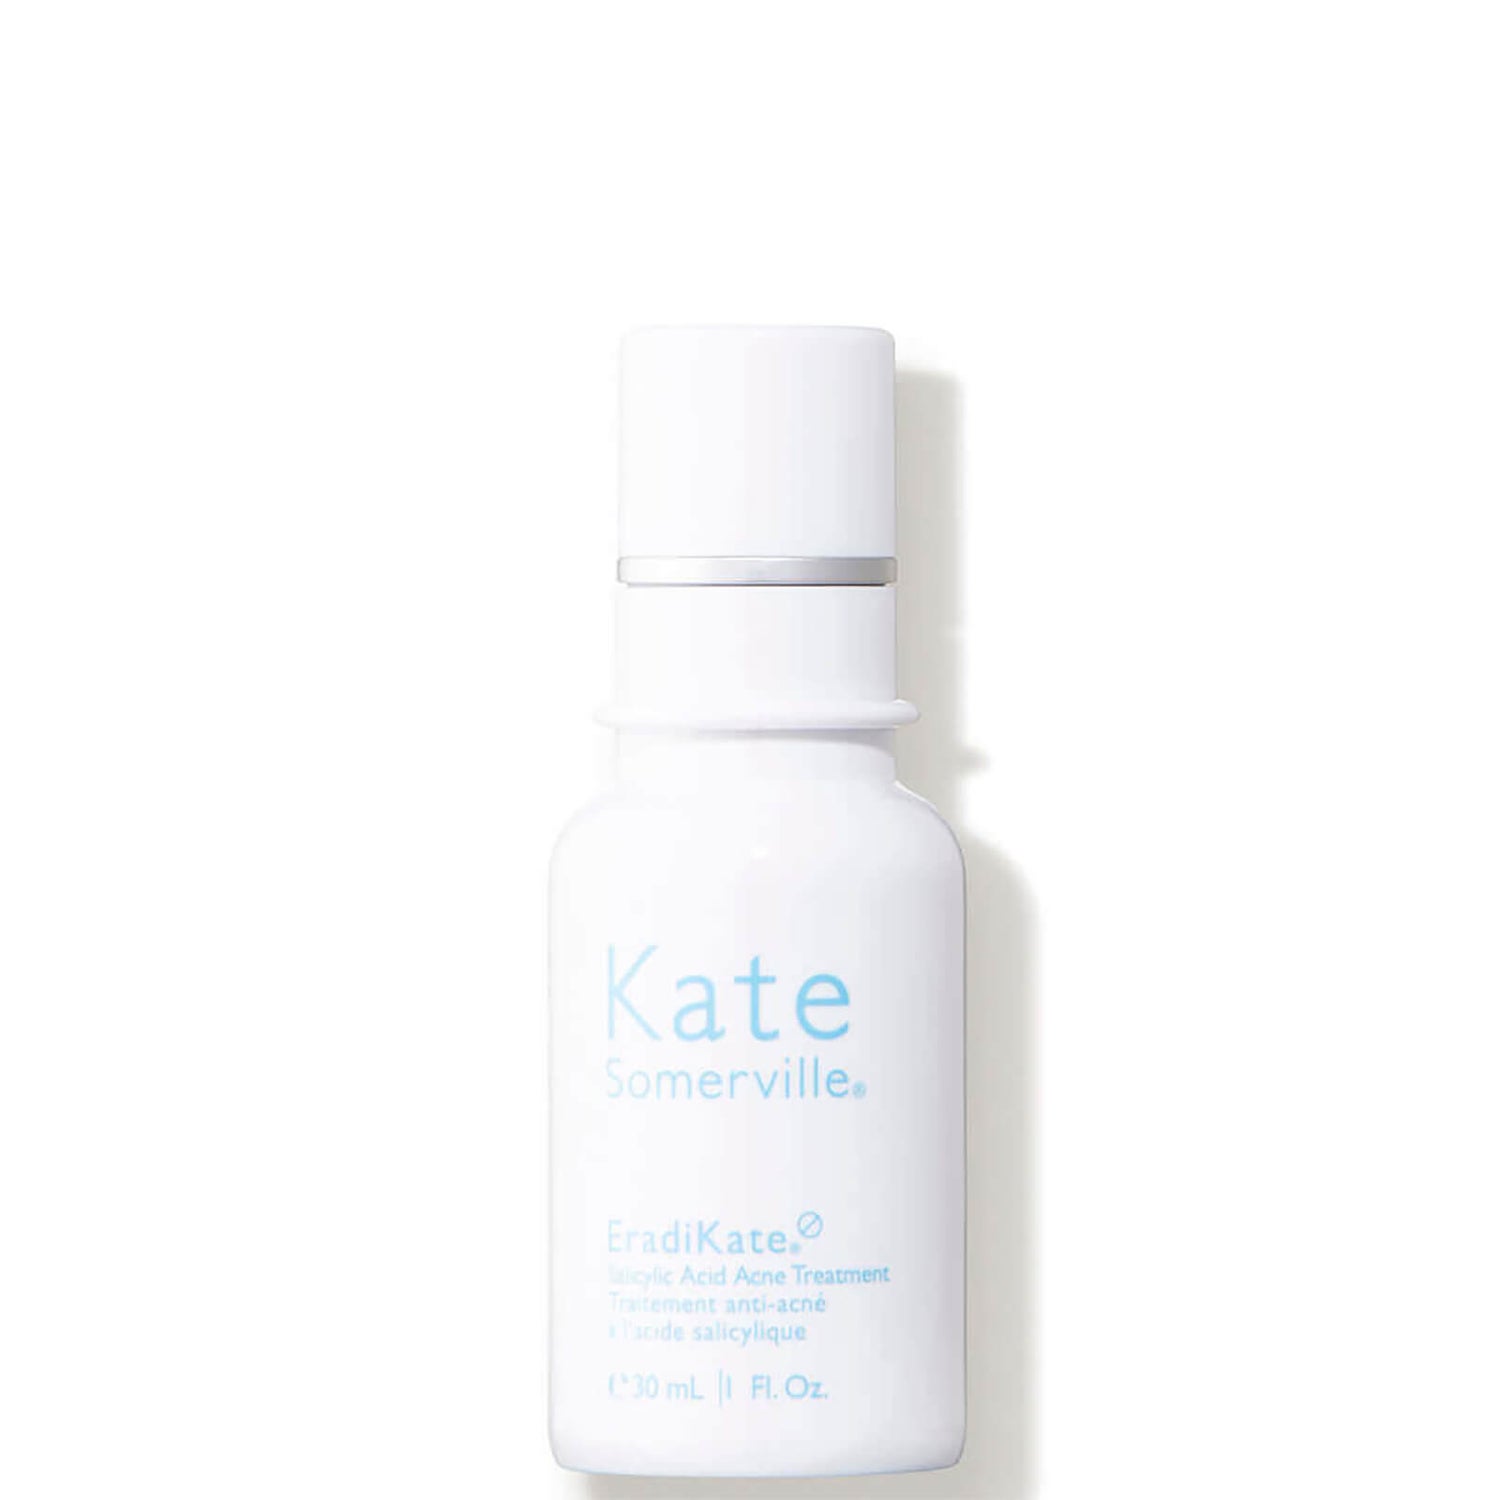 Kate Somerville EradiKate Salicylic Acid Acne Treatment (1 oz.)